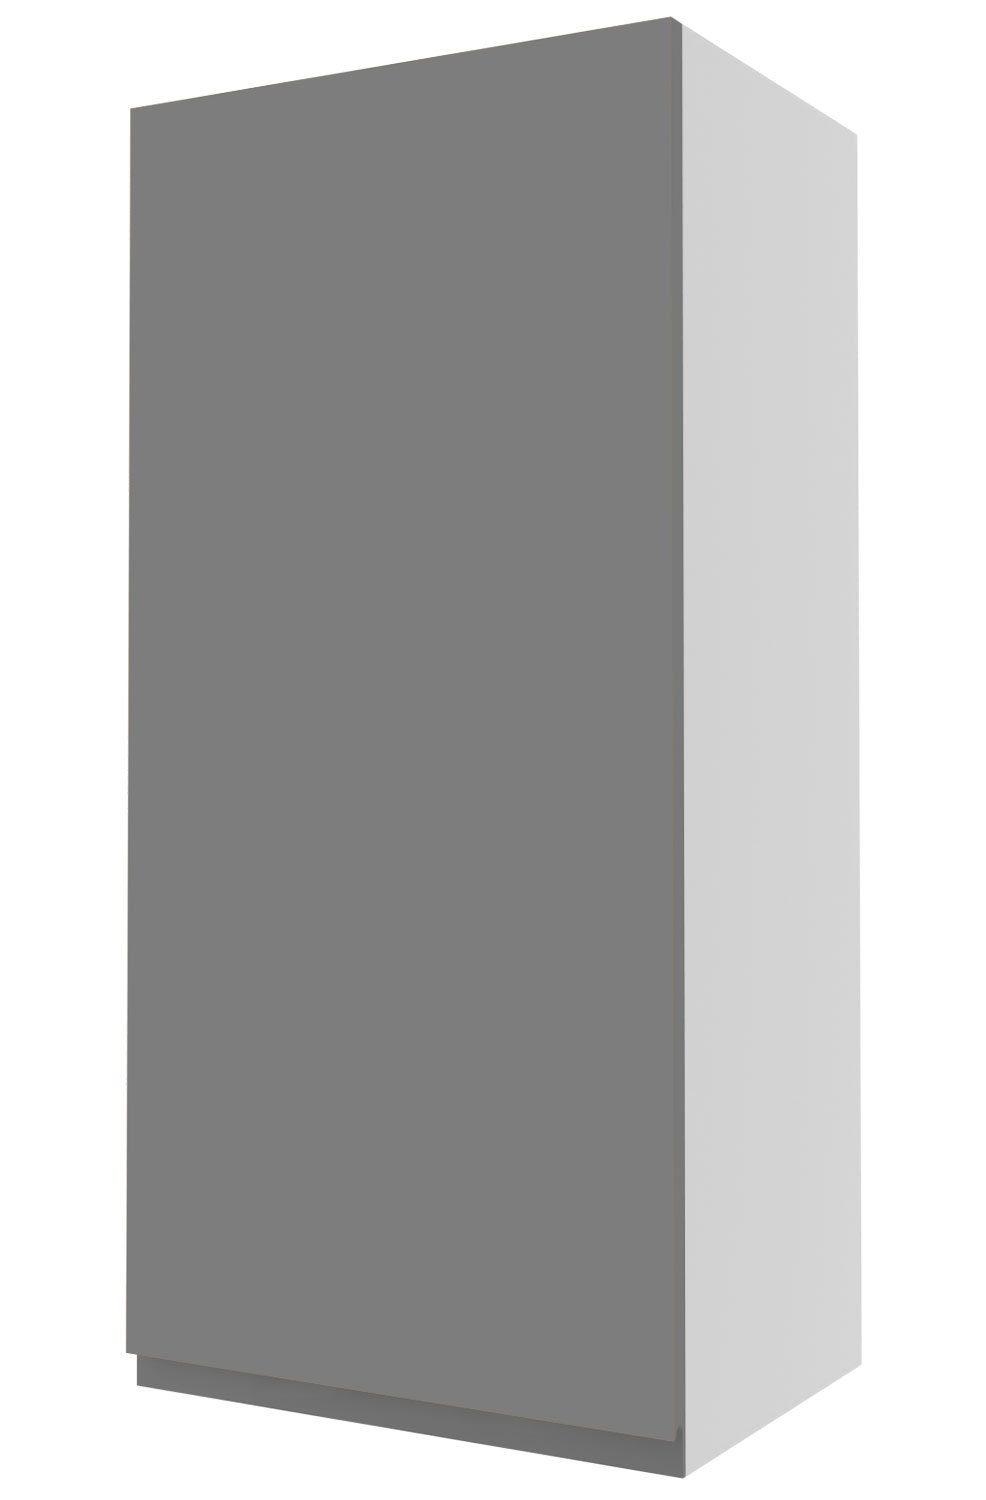 Feldmann-Wohnen Klapphängeschrank Avellino 45cm Front- und Korpusfarbe wählbar grifflos, 1-türig dust grey Acryl matt